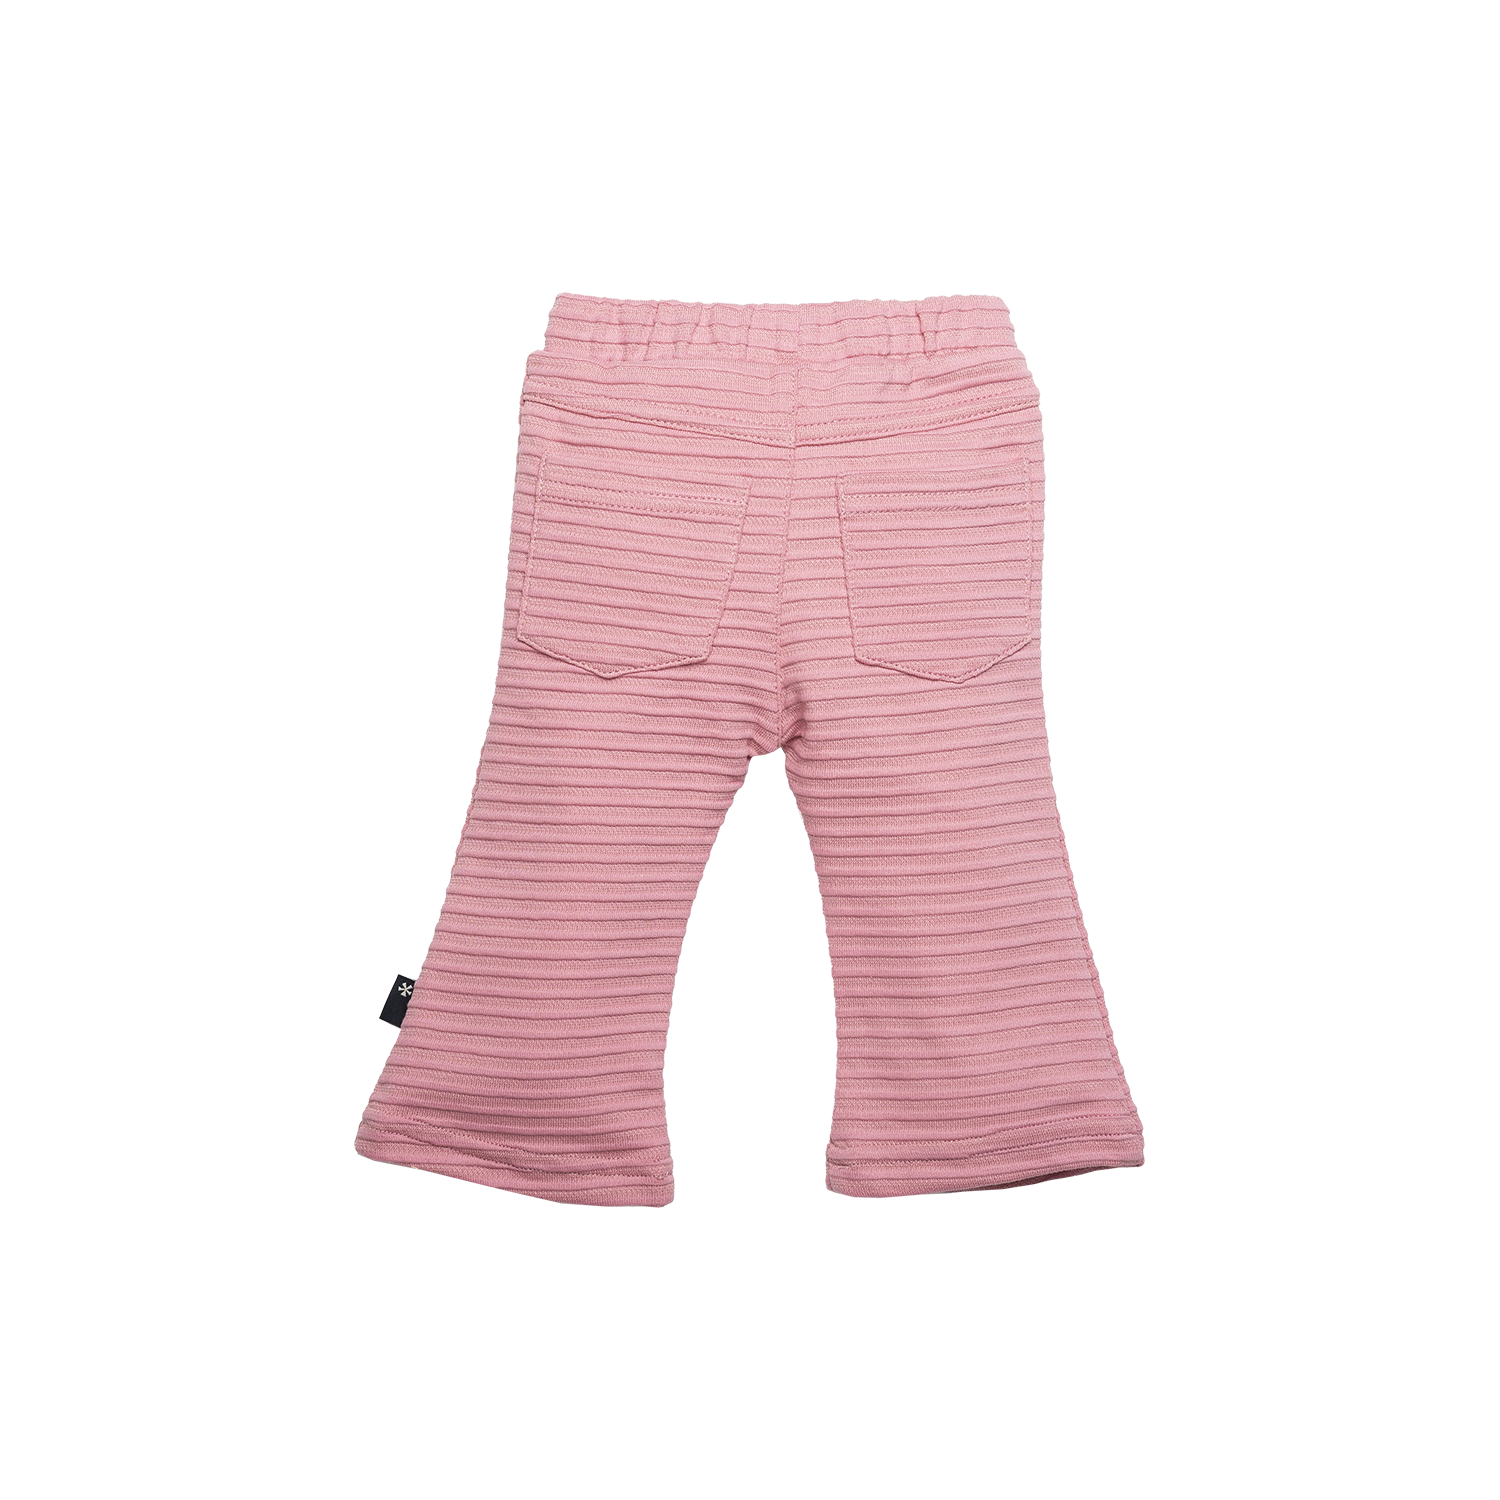 Meisjes Pants Rib Flared van B.E.S.S. in de kleur Pink in maat 68.